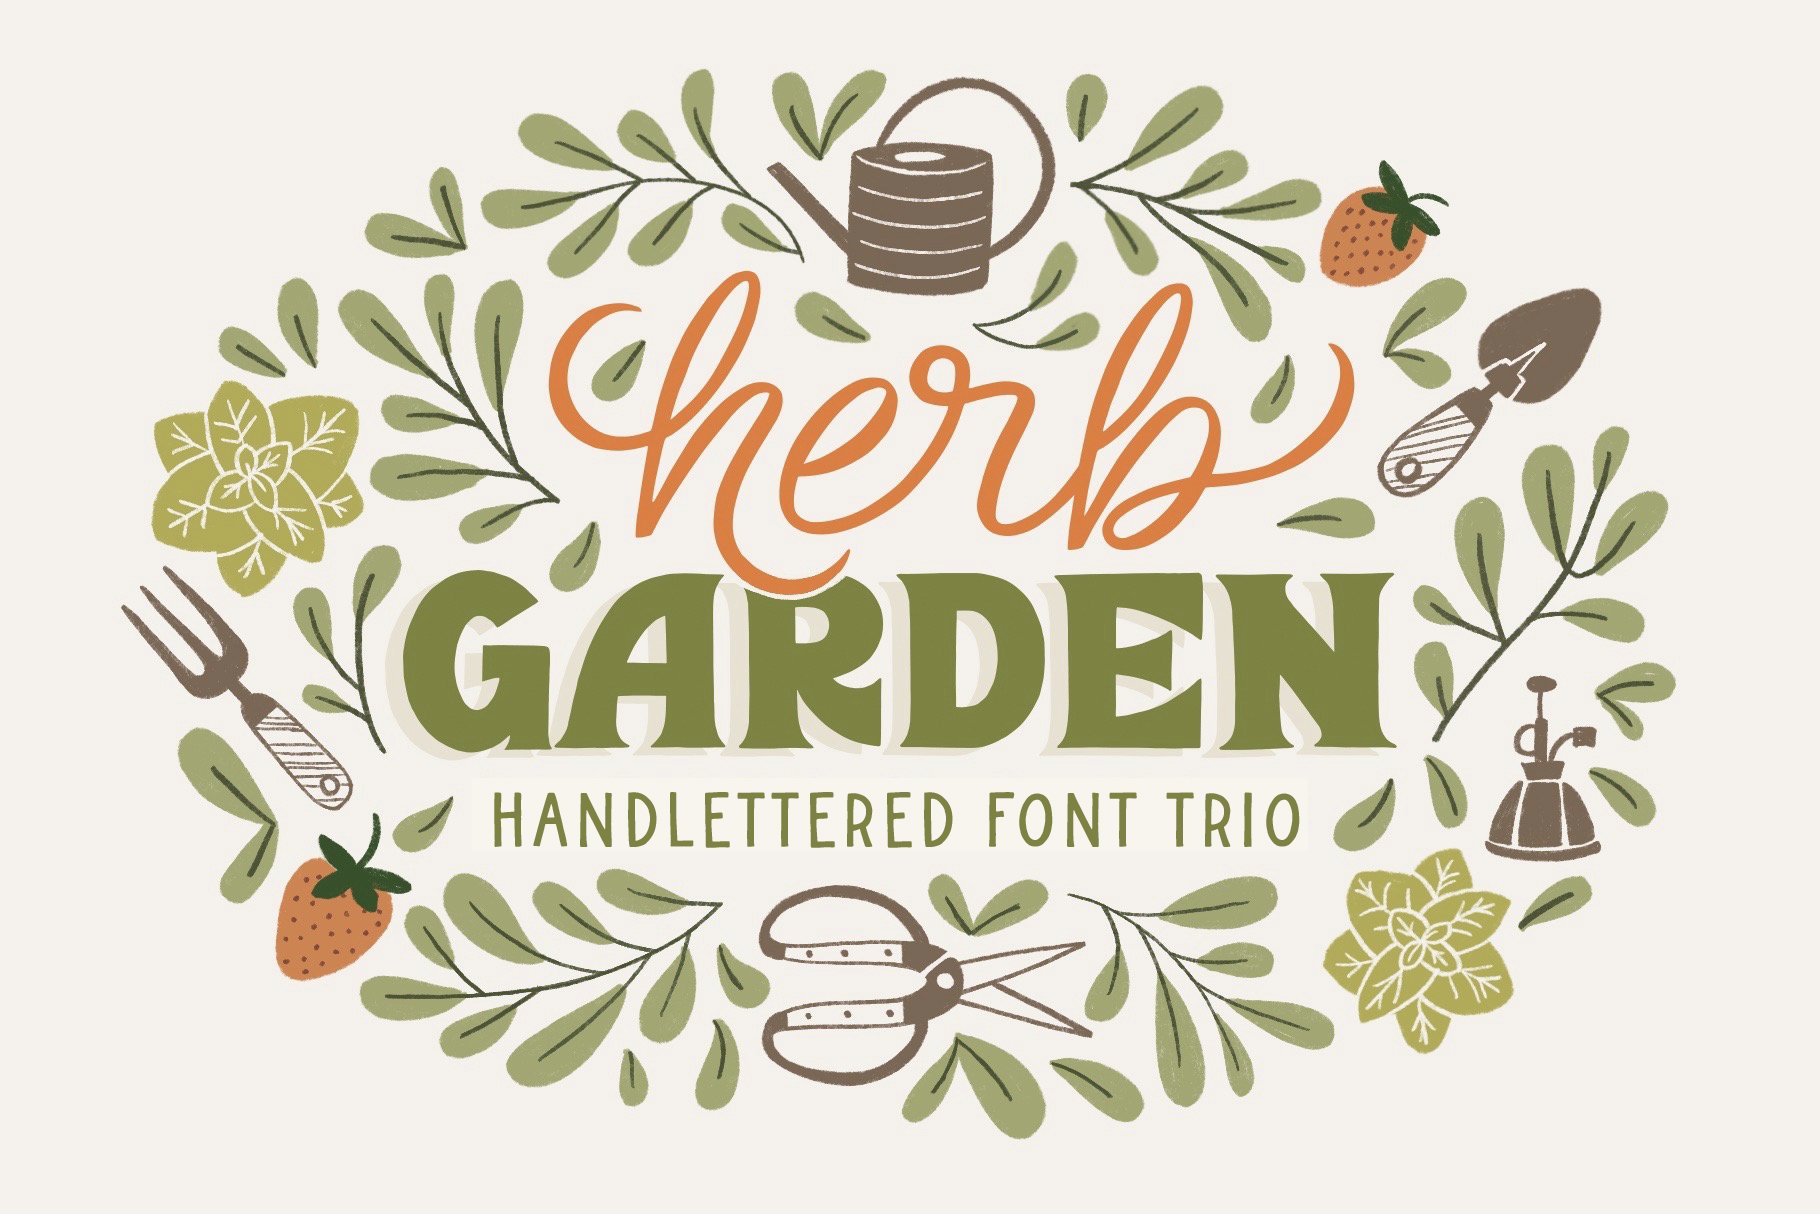 Herb Garden Font Trio cover image.